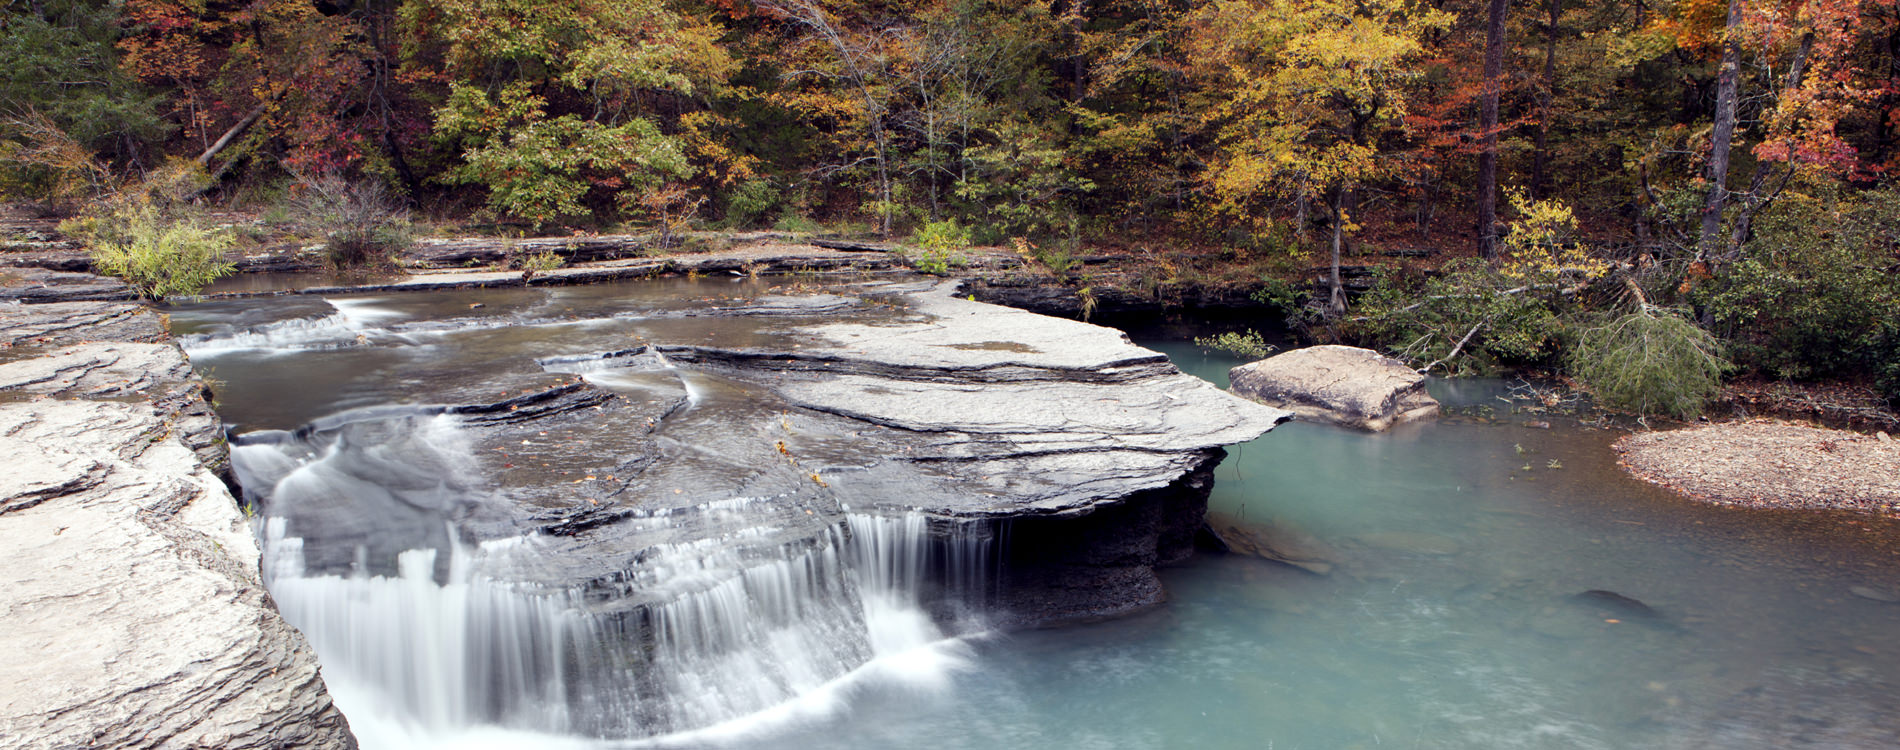 Haw Creek Waterfall in the Ozark Mountains Arkansas